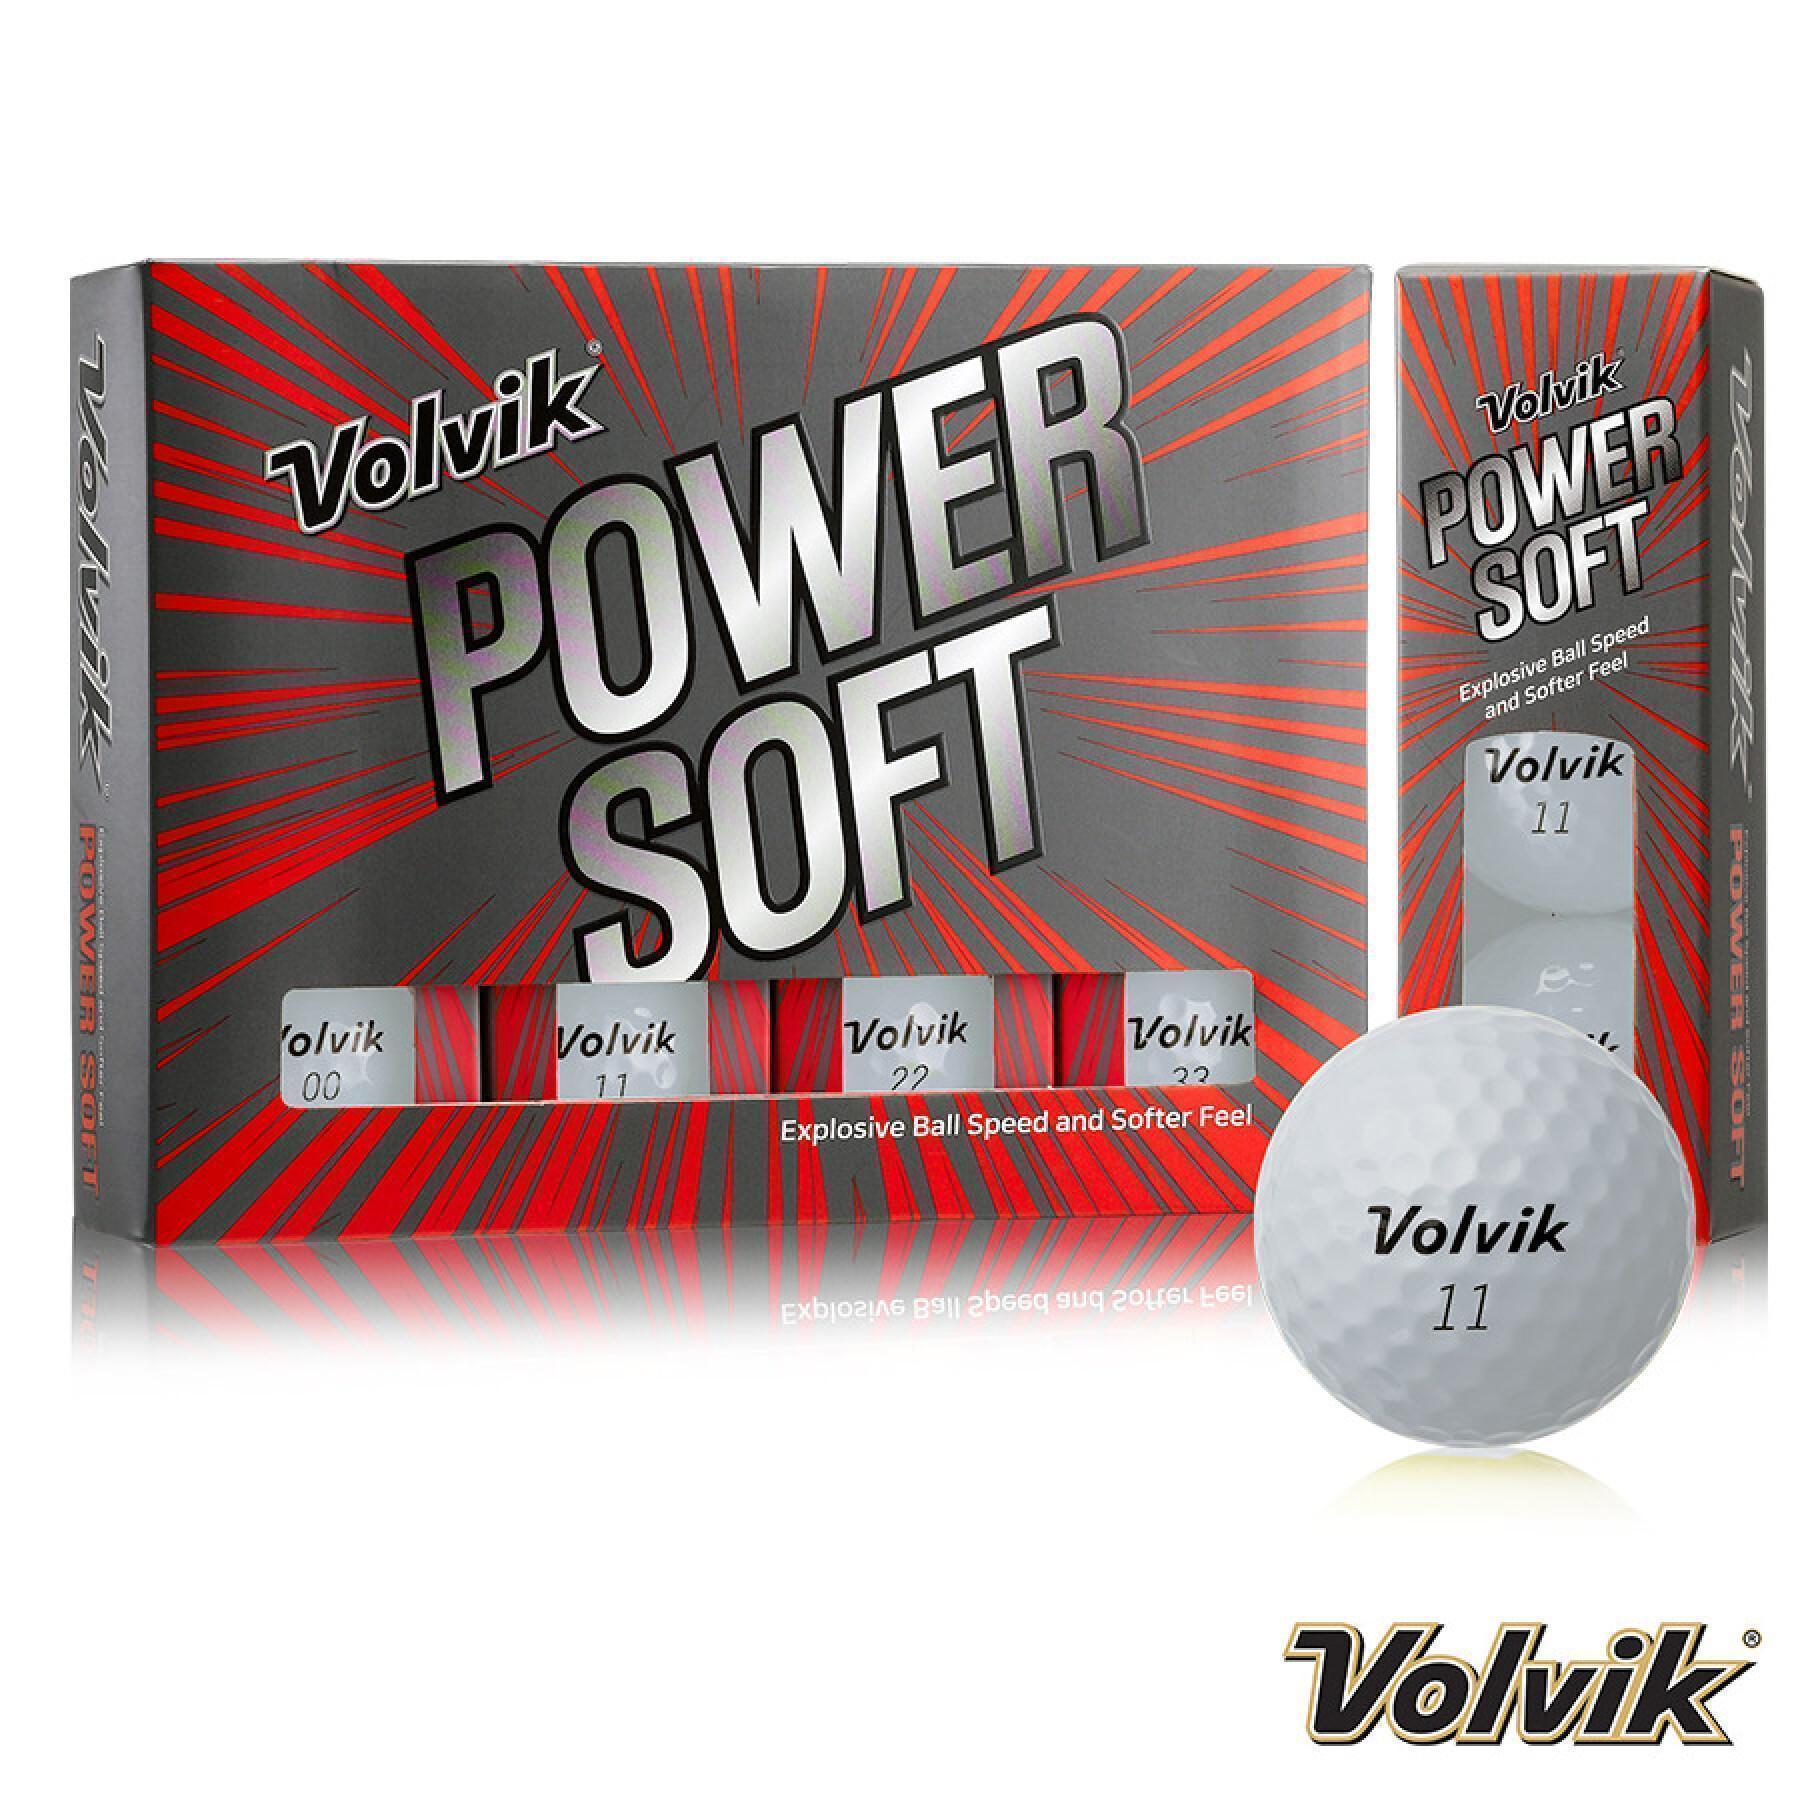 Lot of 12 golf balls Volvik Power Soft